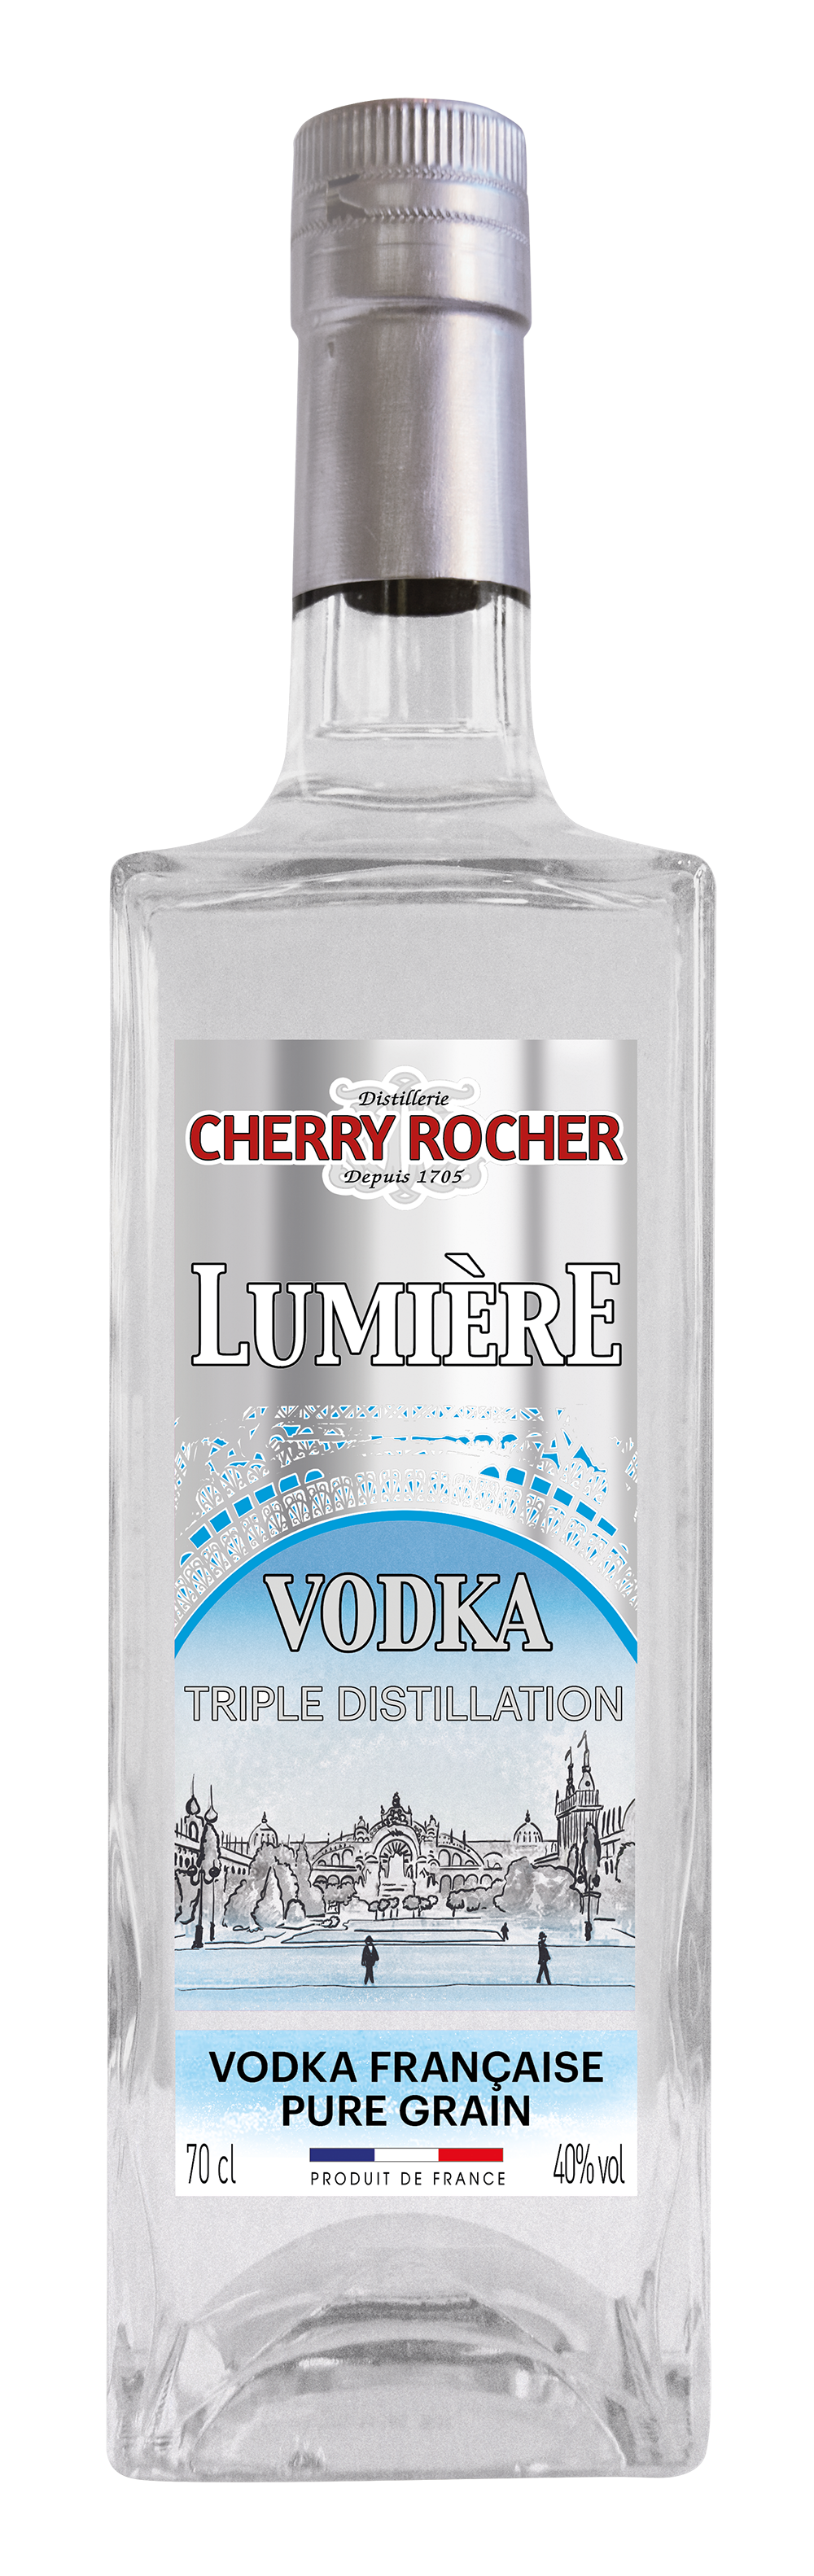 Vodka Lumière - Cherry Rocher